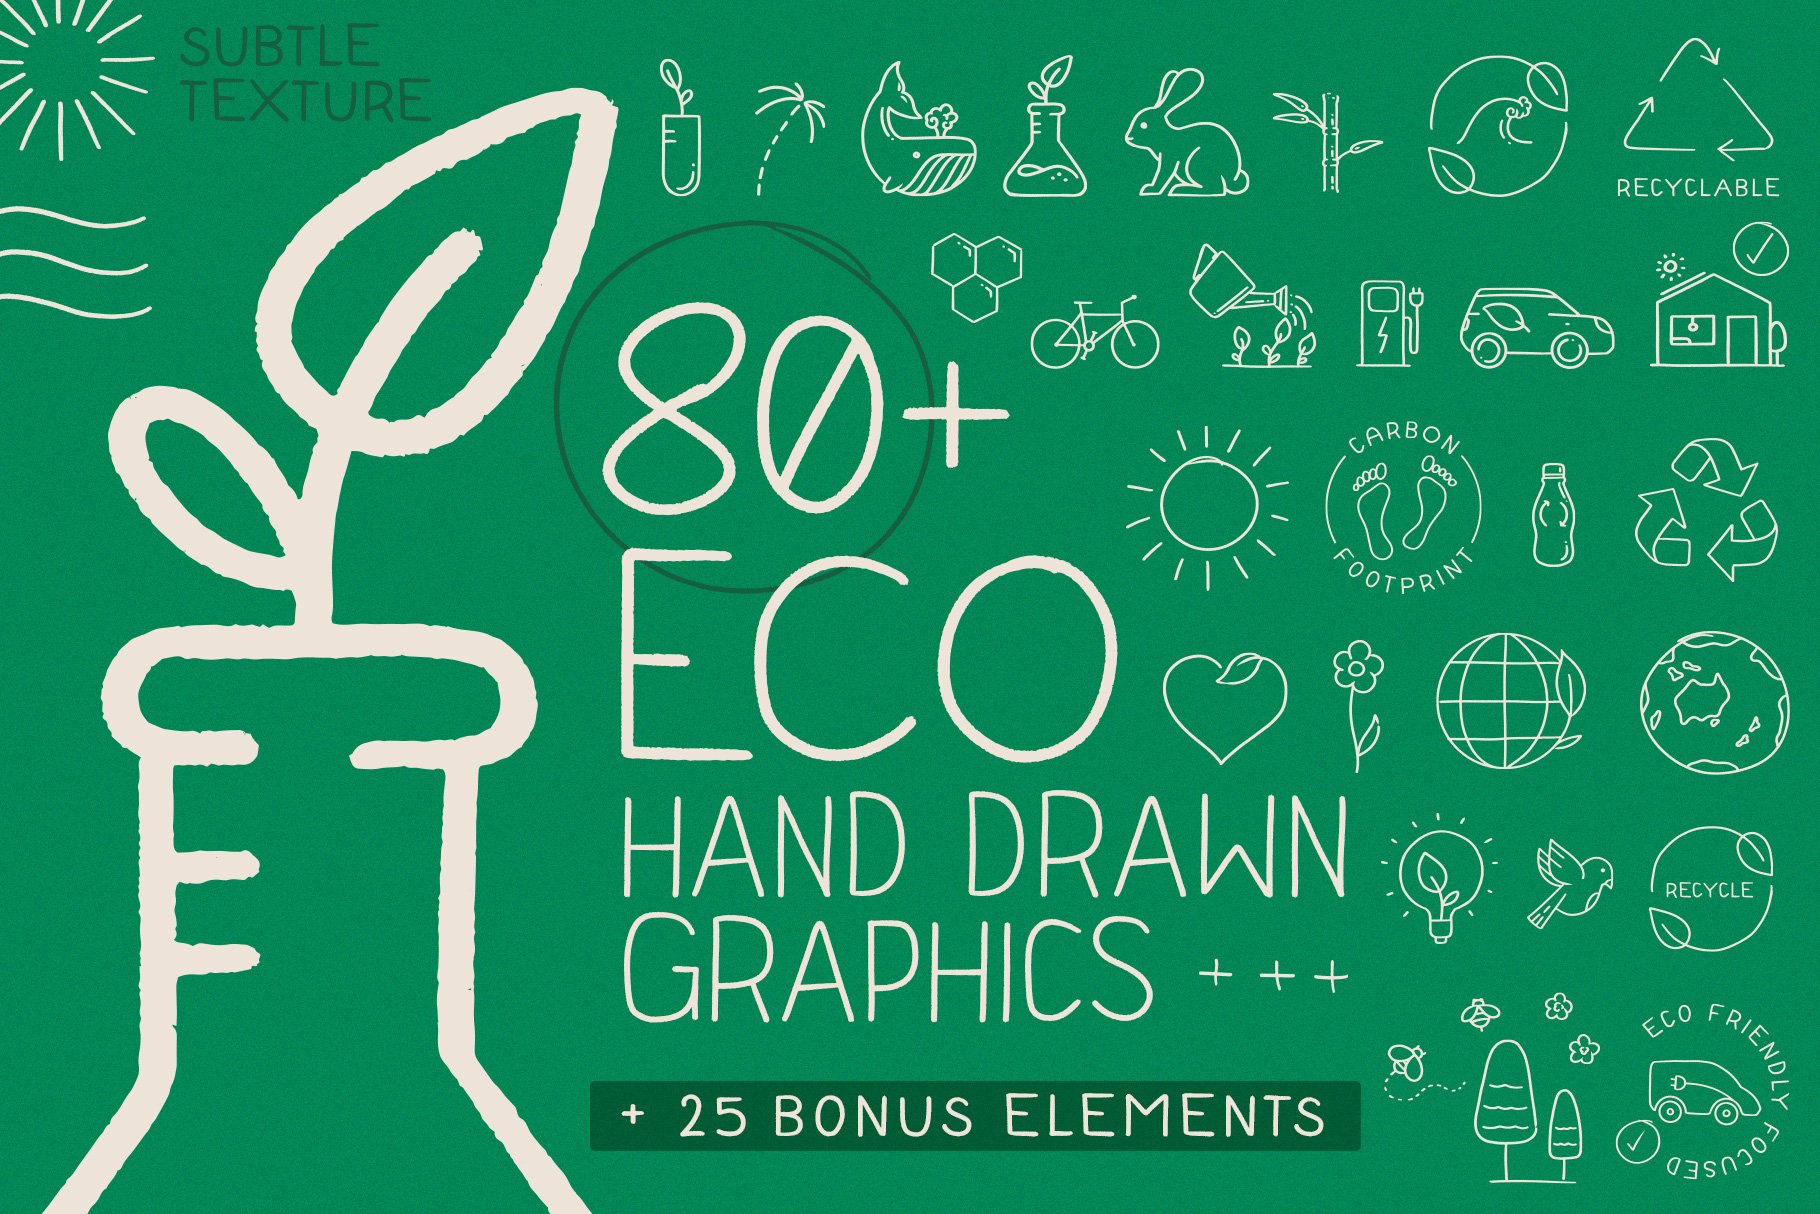 80+ eco graphics & 25 bonus elements cover image.